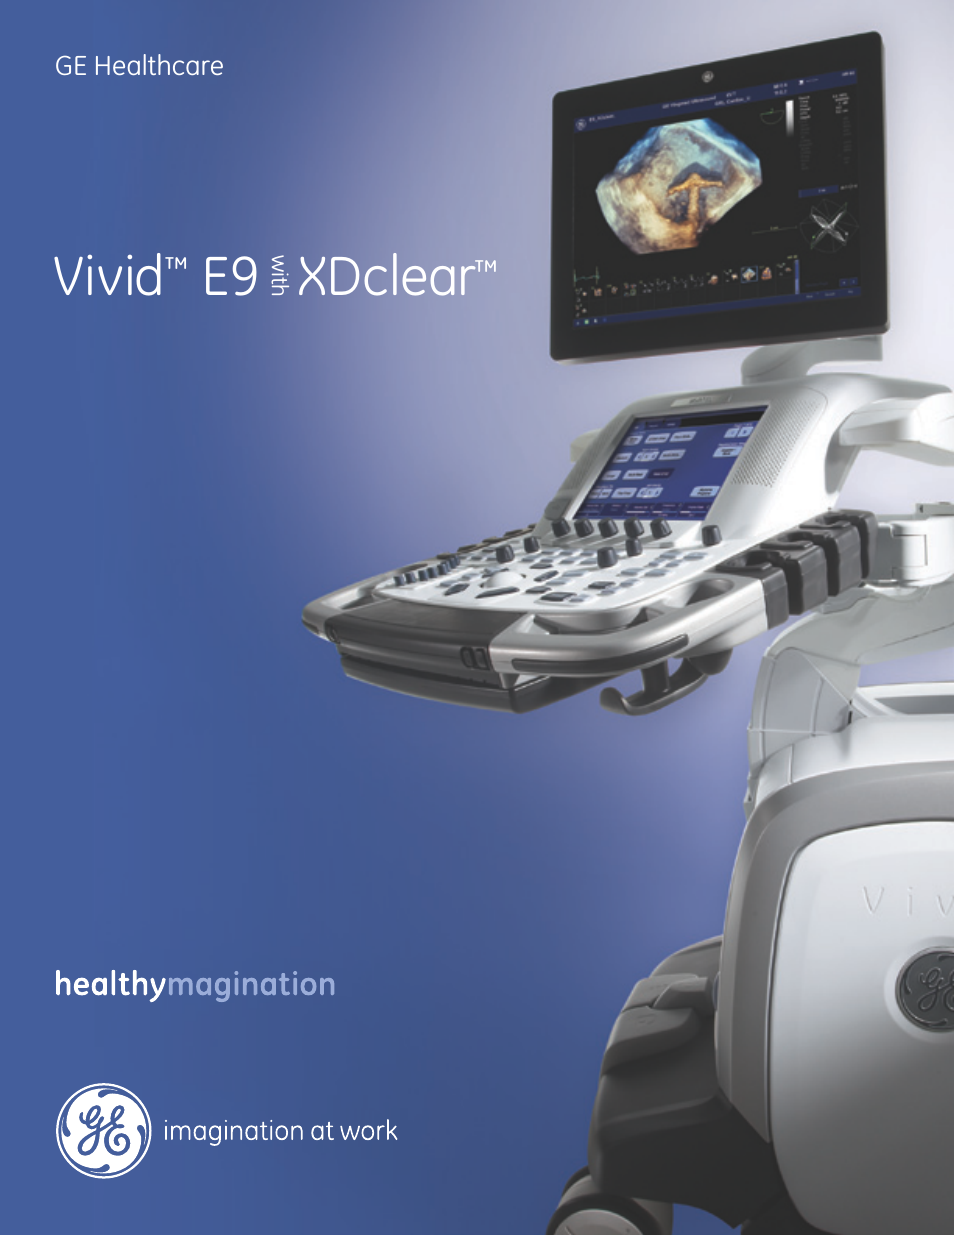 Vivid E9 with XDclear